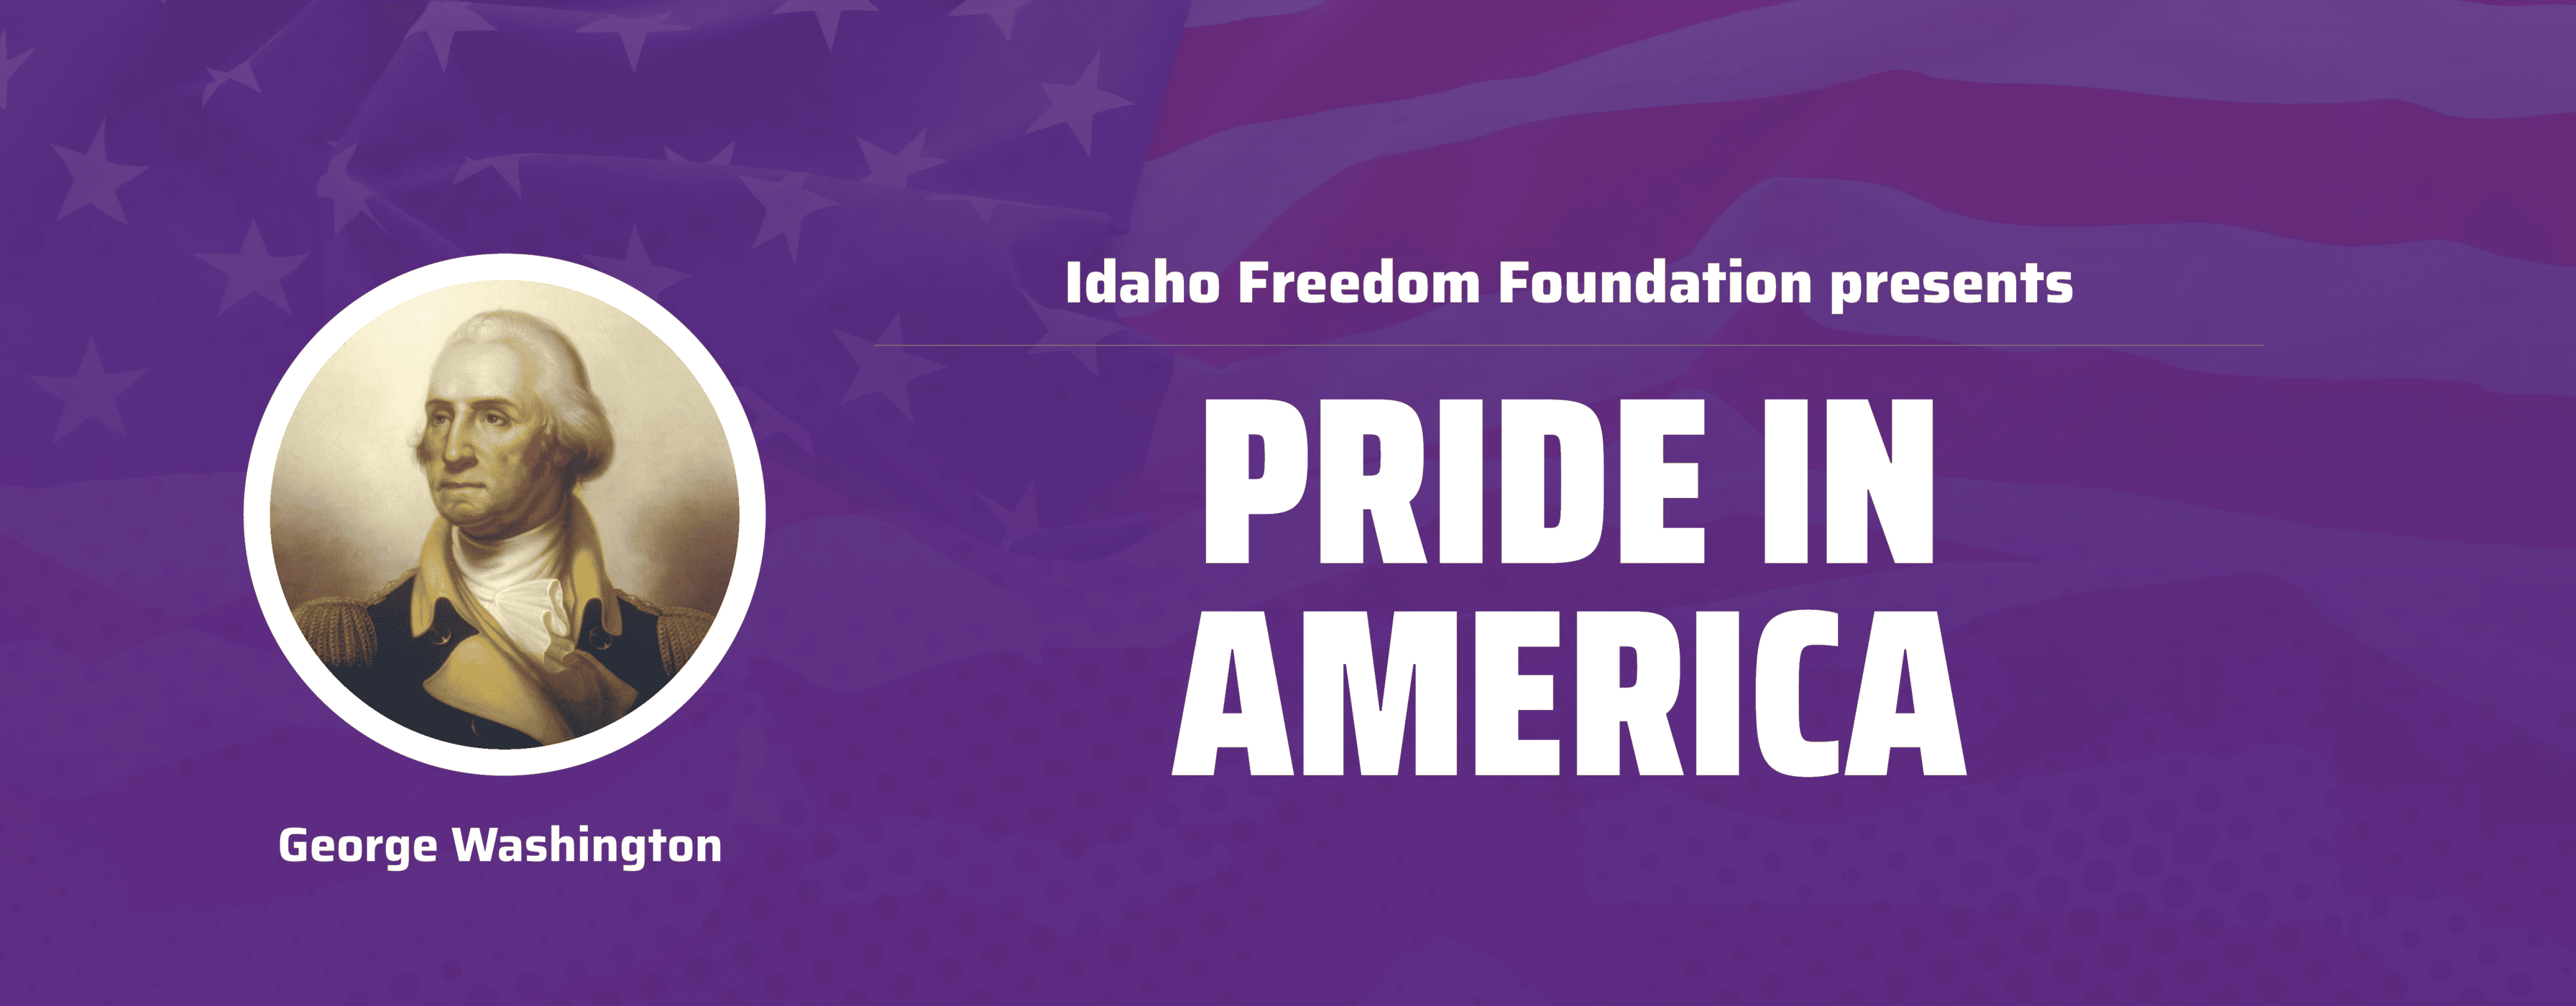 Pride in America Washington Idaho Freedom